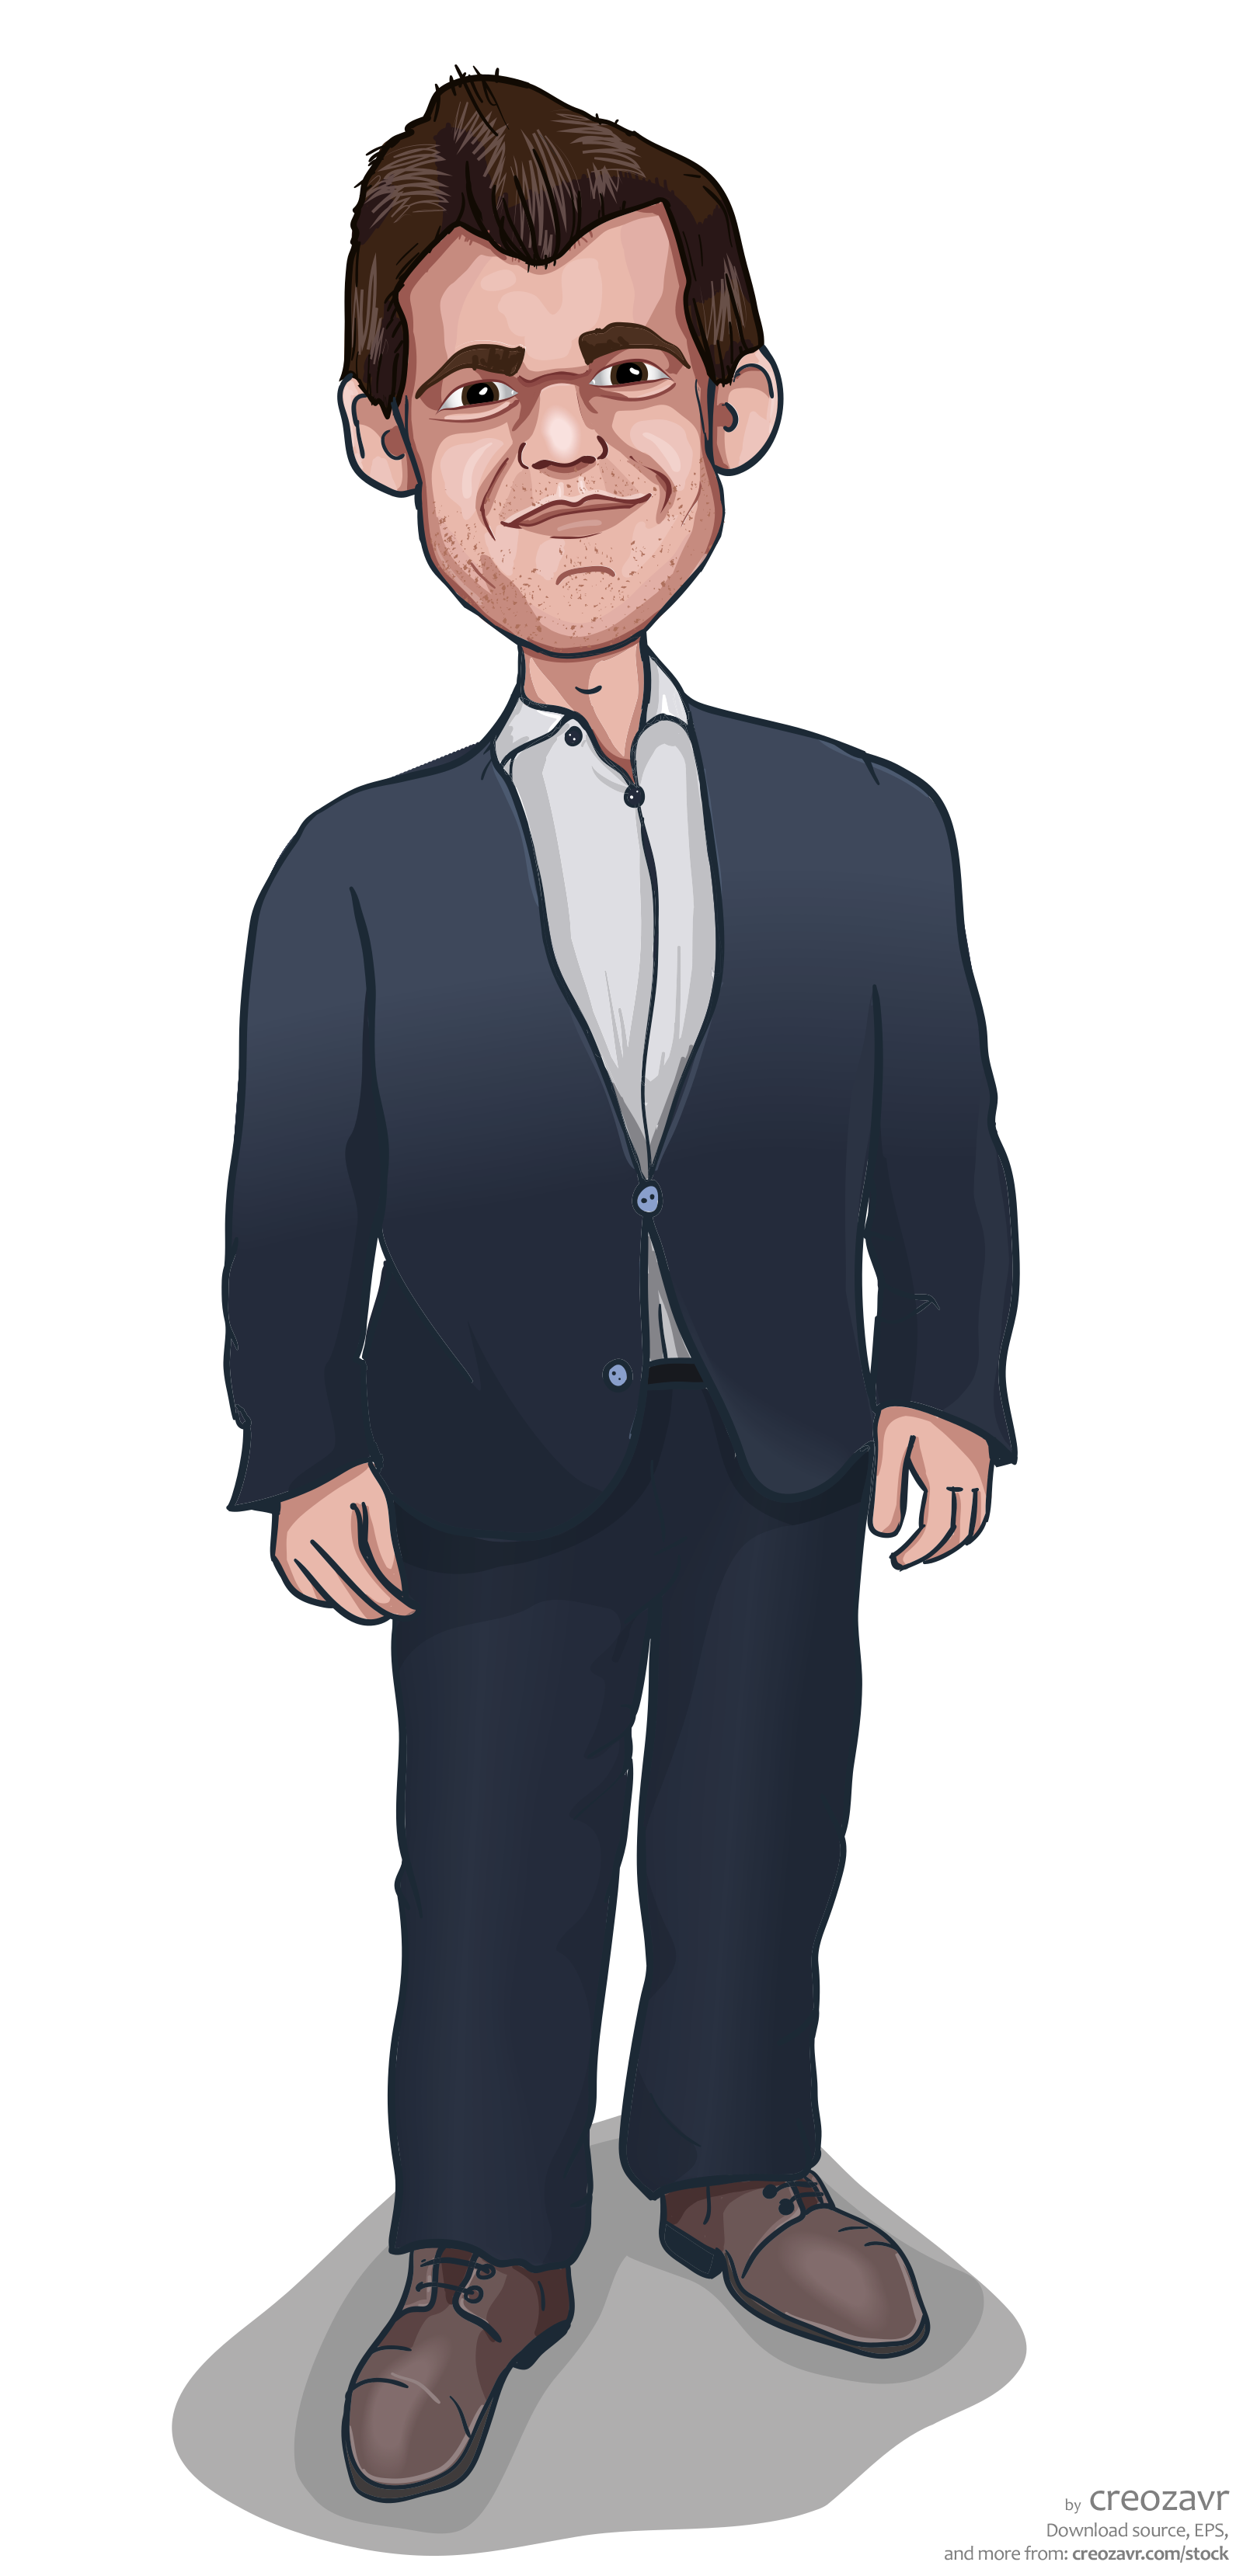 Animated Magnus Carlsen. Illustration, cartoon